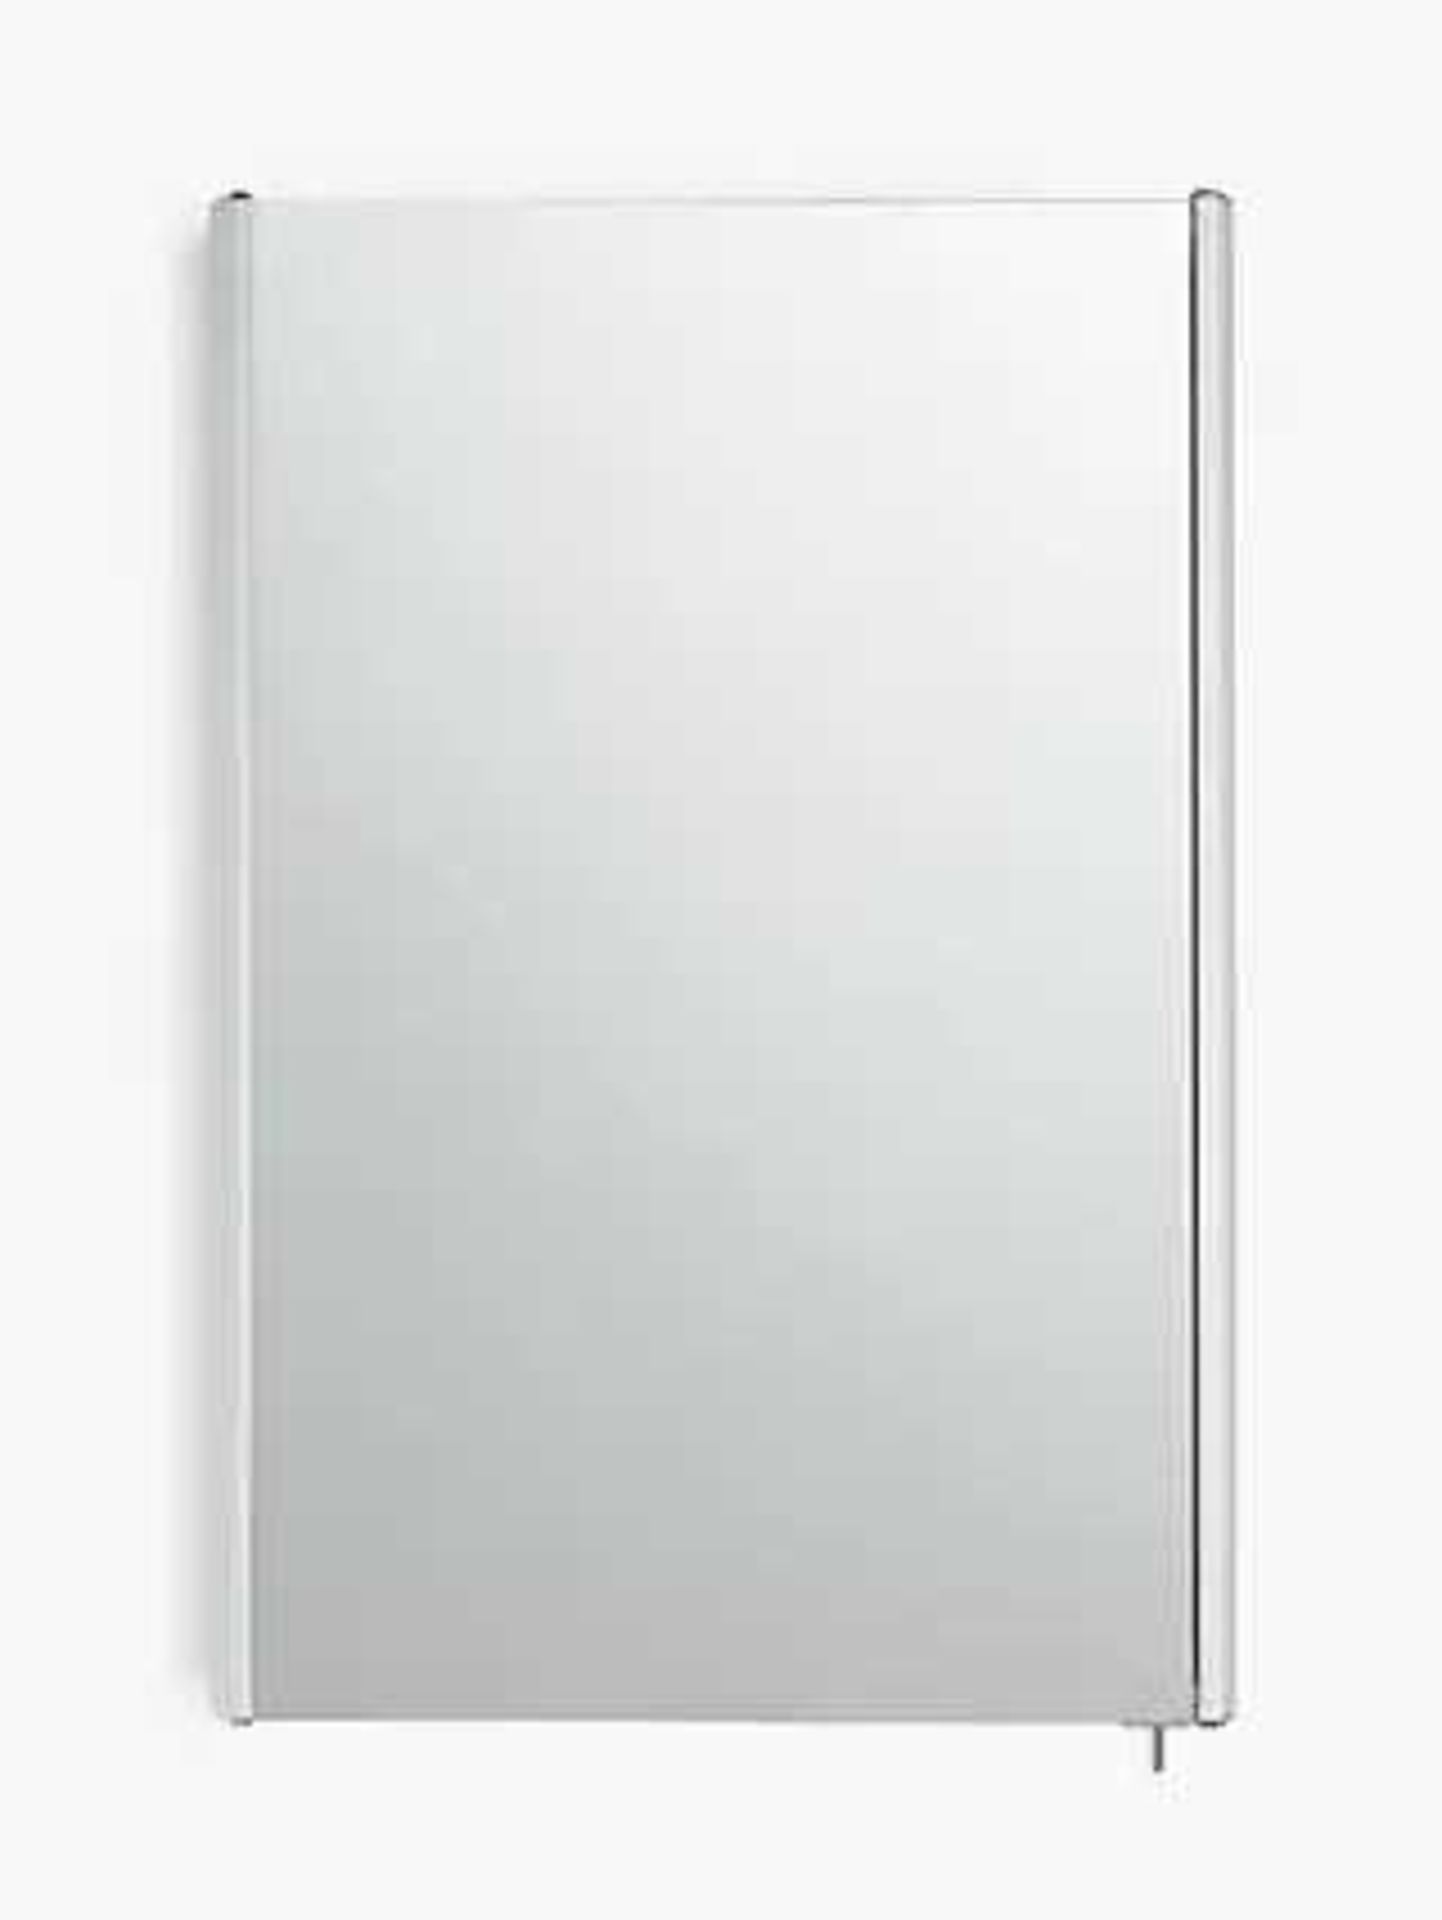 RRP £300 Unboxed Single Door Illuminated Mirrored Bathroom Cabinet